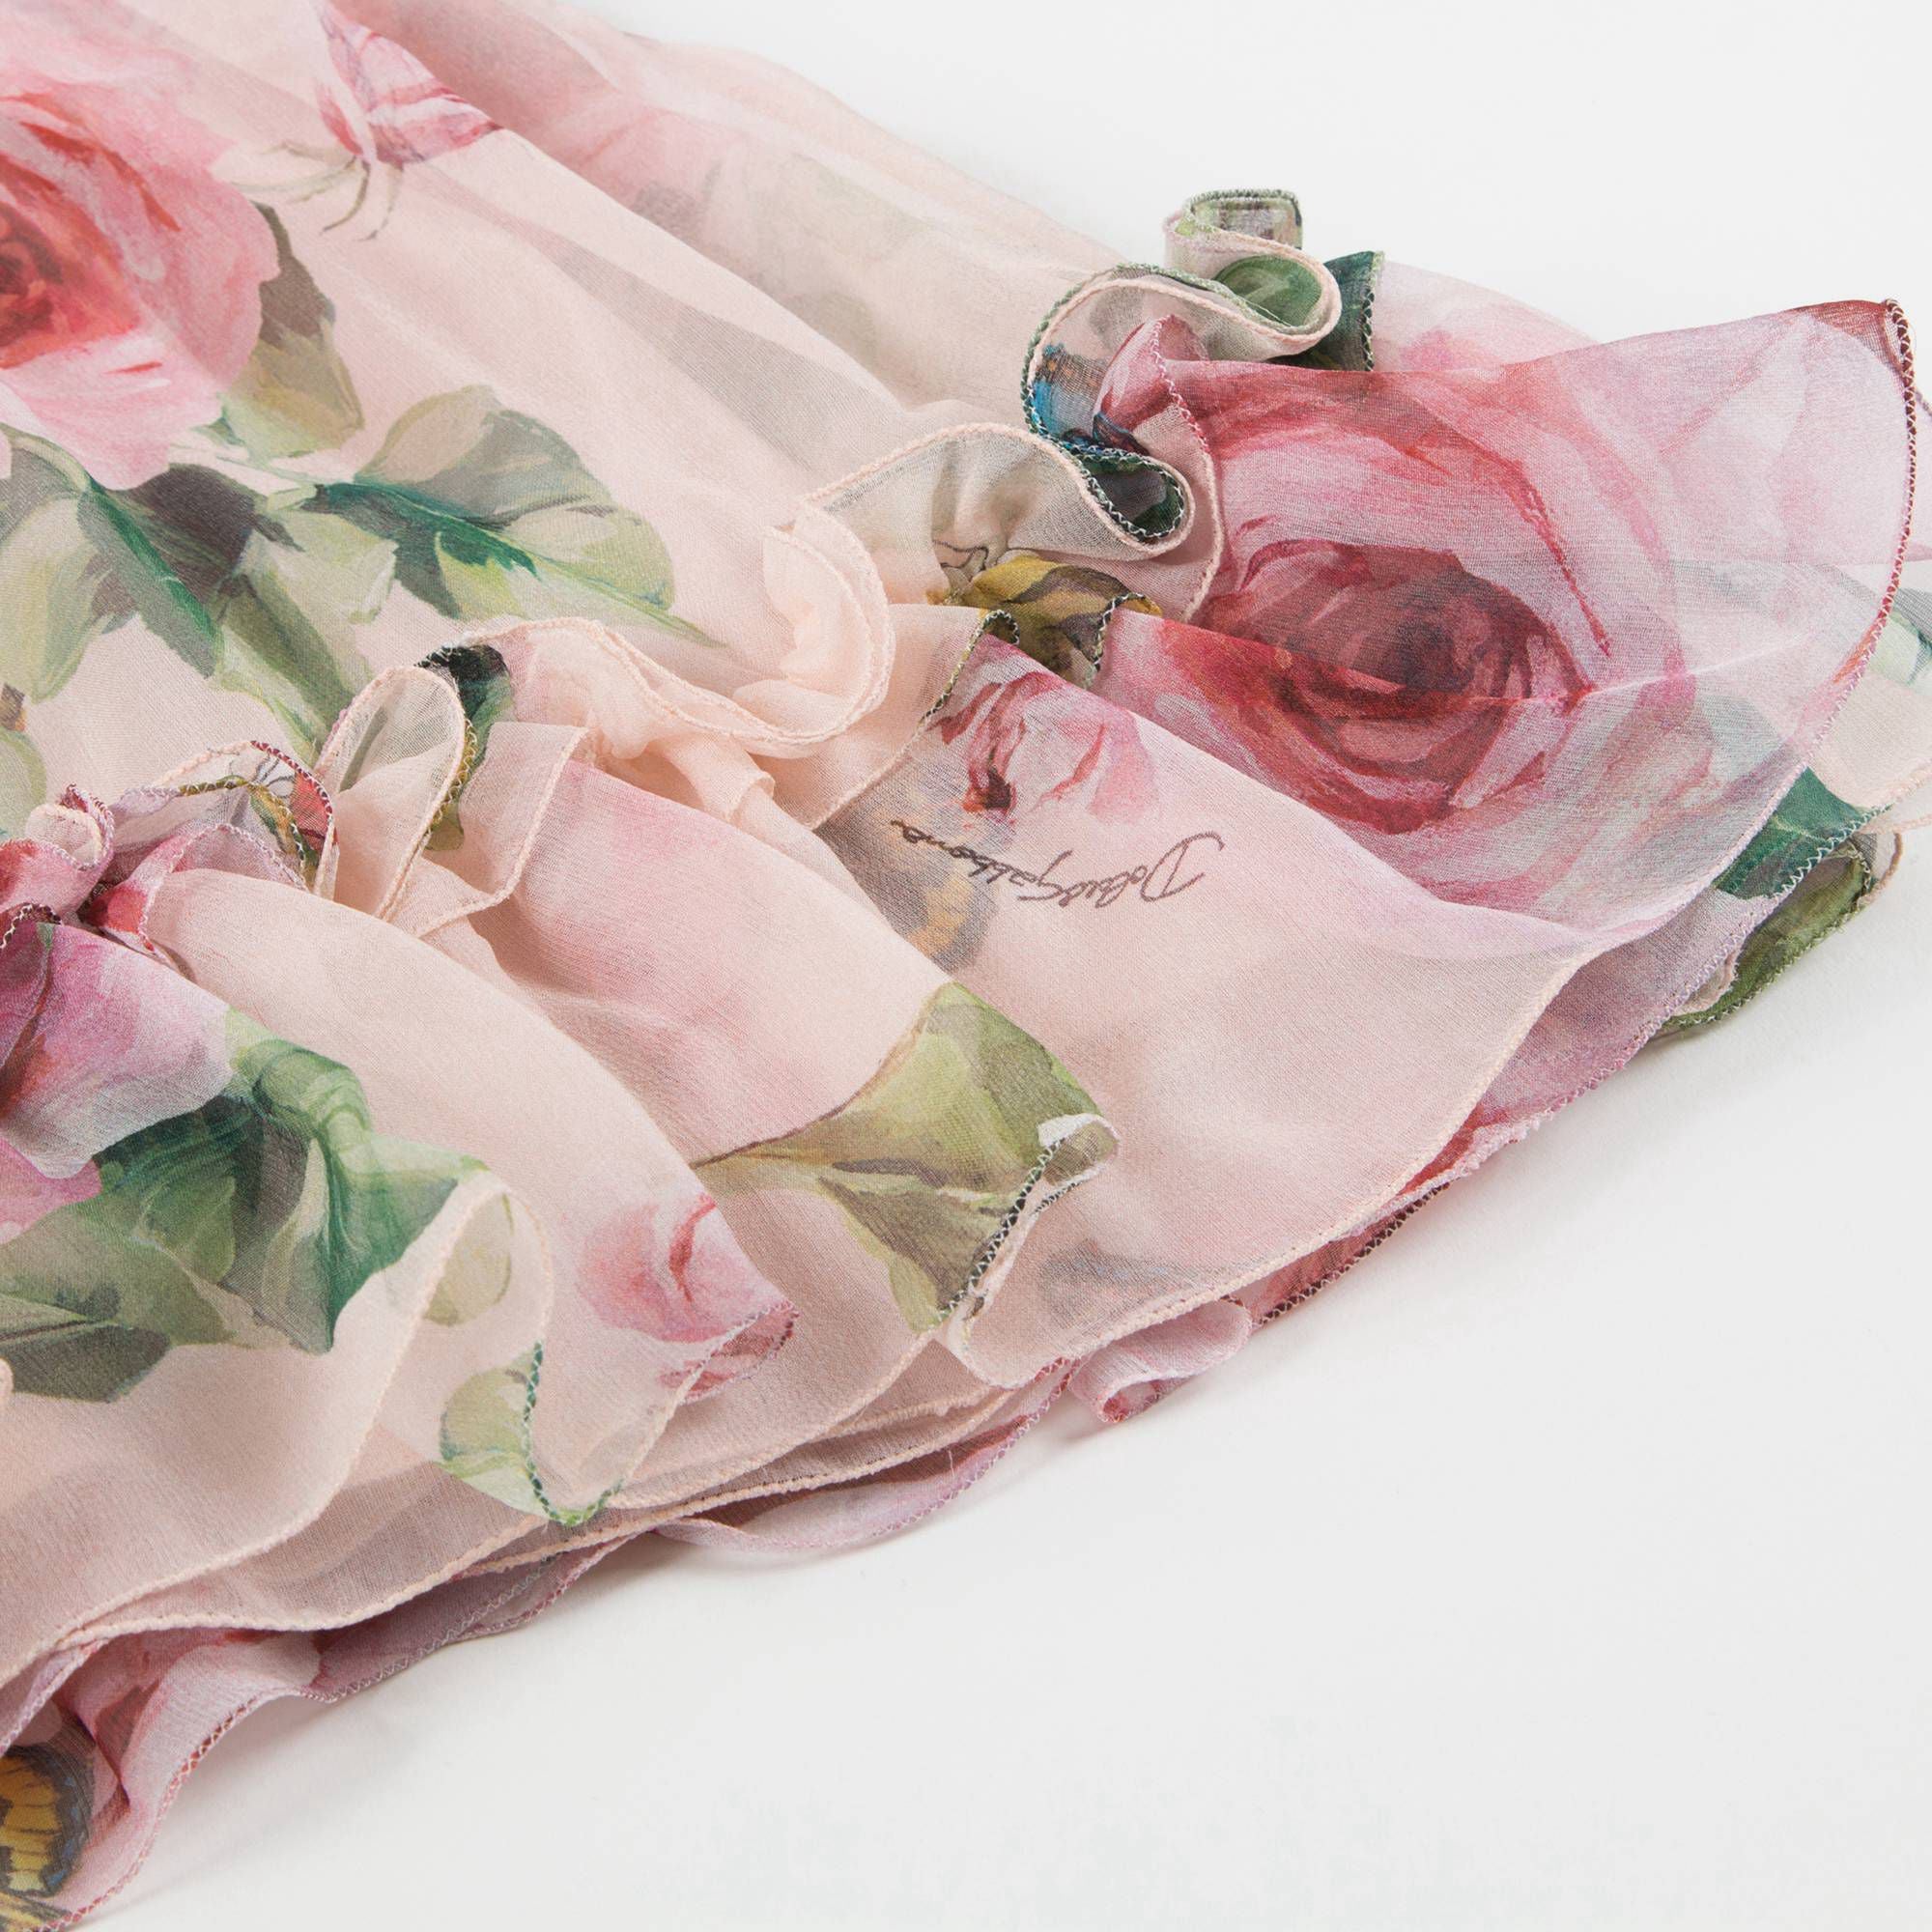 Baby Girls Rose Butterfly Printing Dress